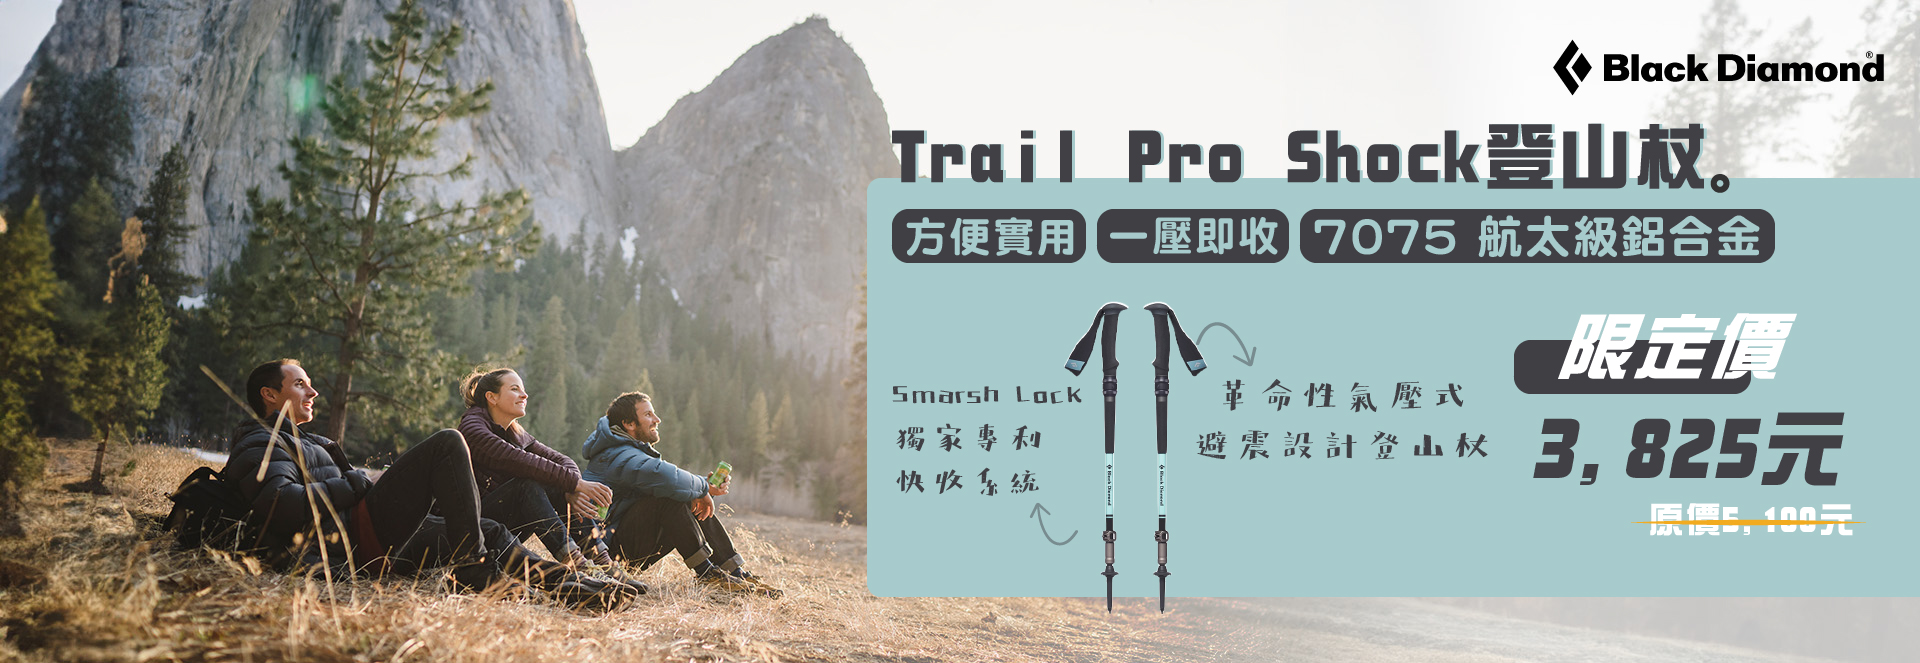 Trail Pro Shock 